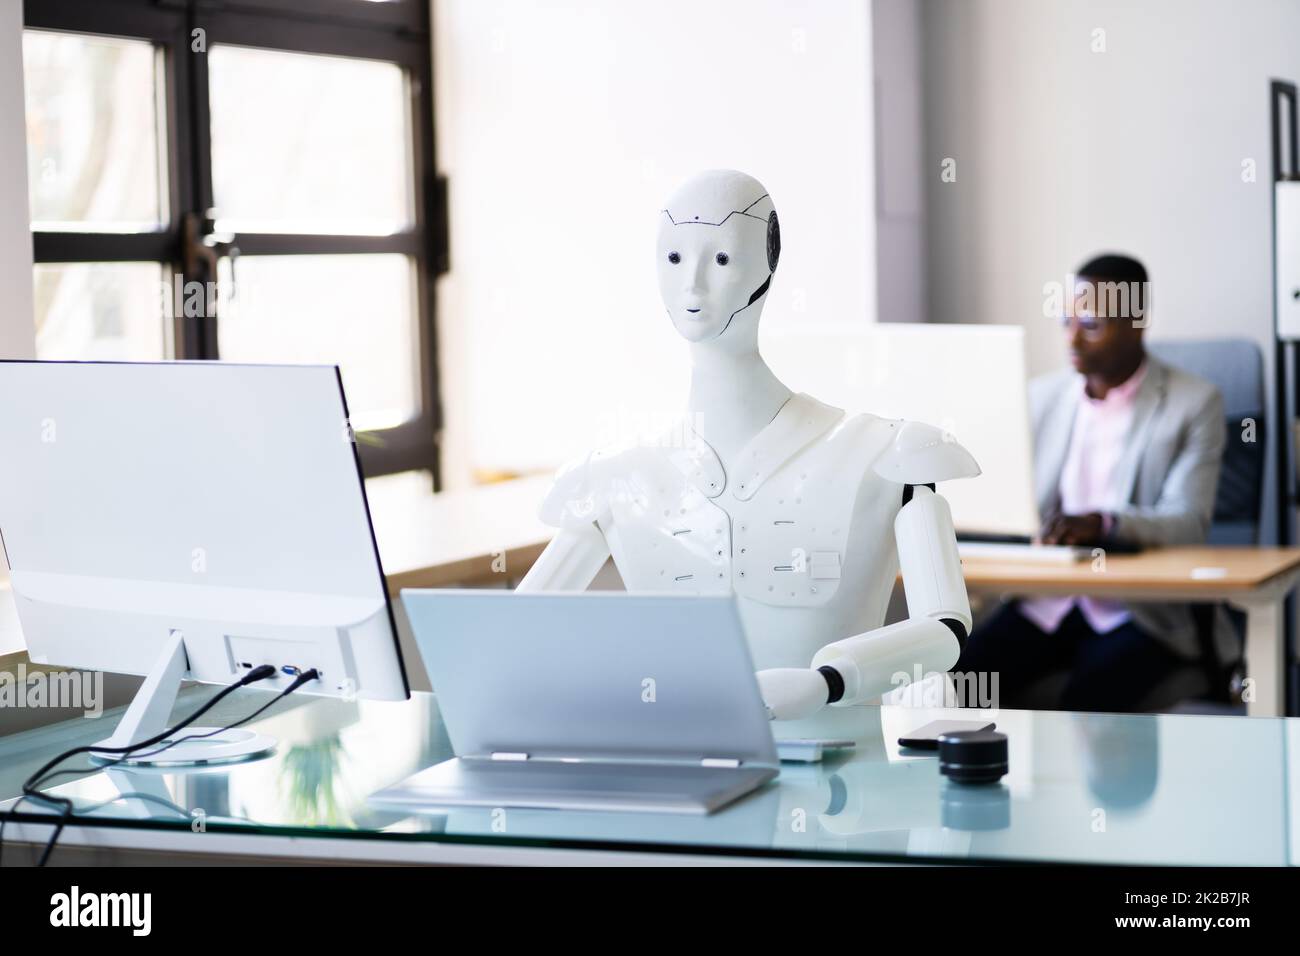 Artificial Intelligence Smart Robot Replacing Human Stock Photo